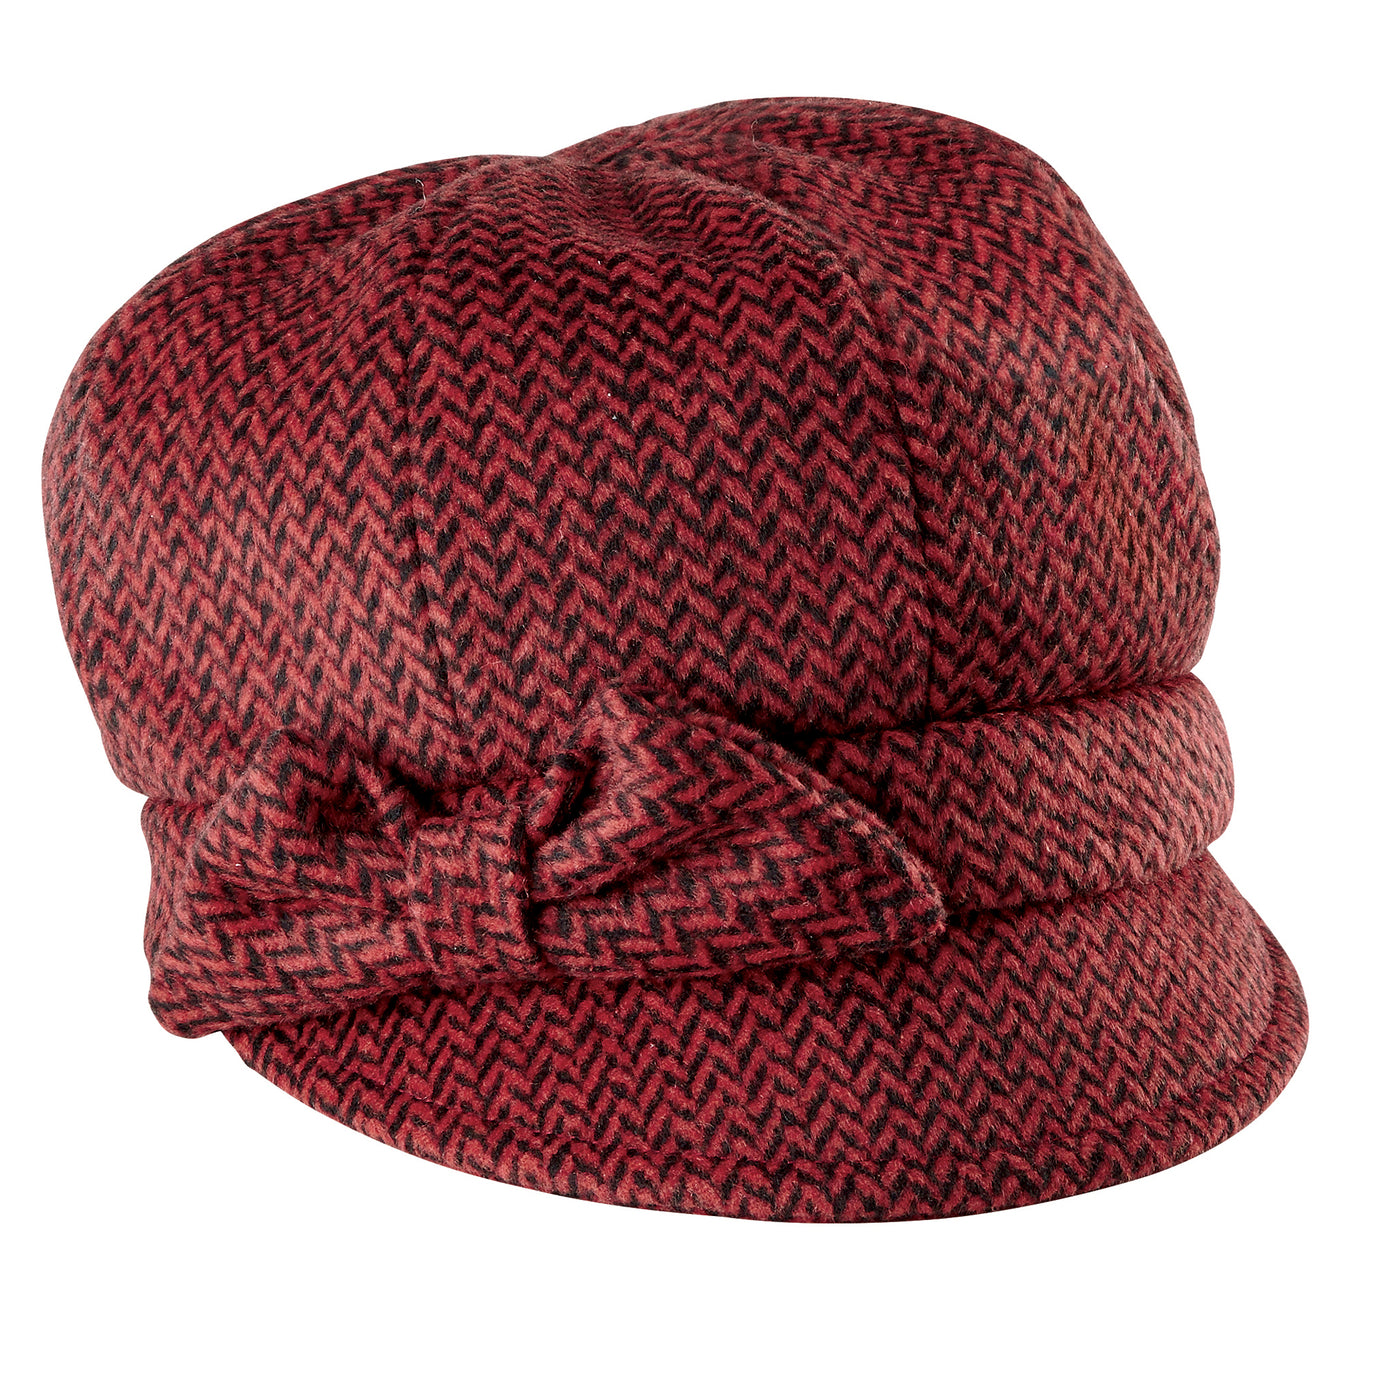 CAP - Women's Wool Cap With Bow